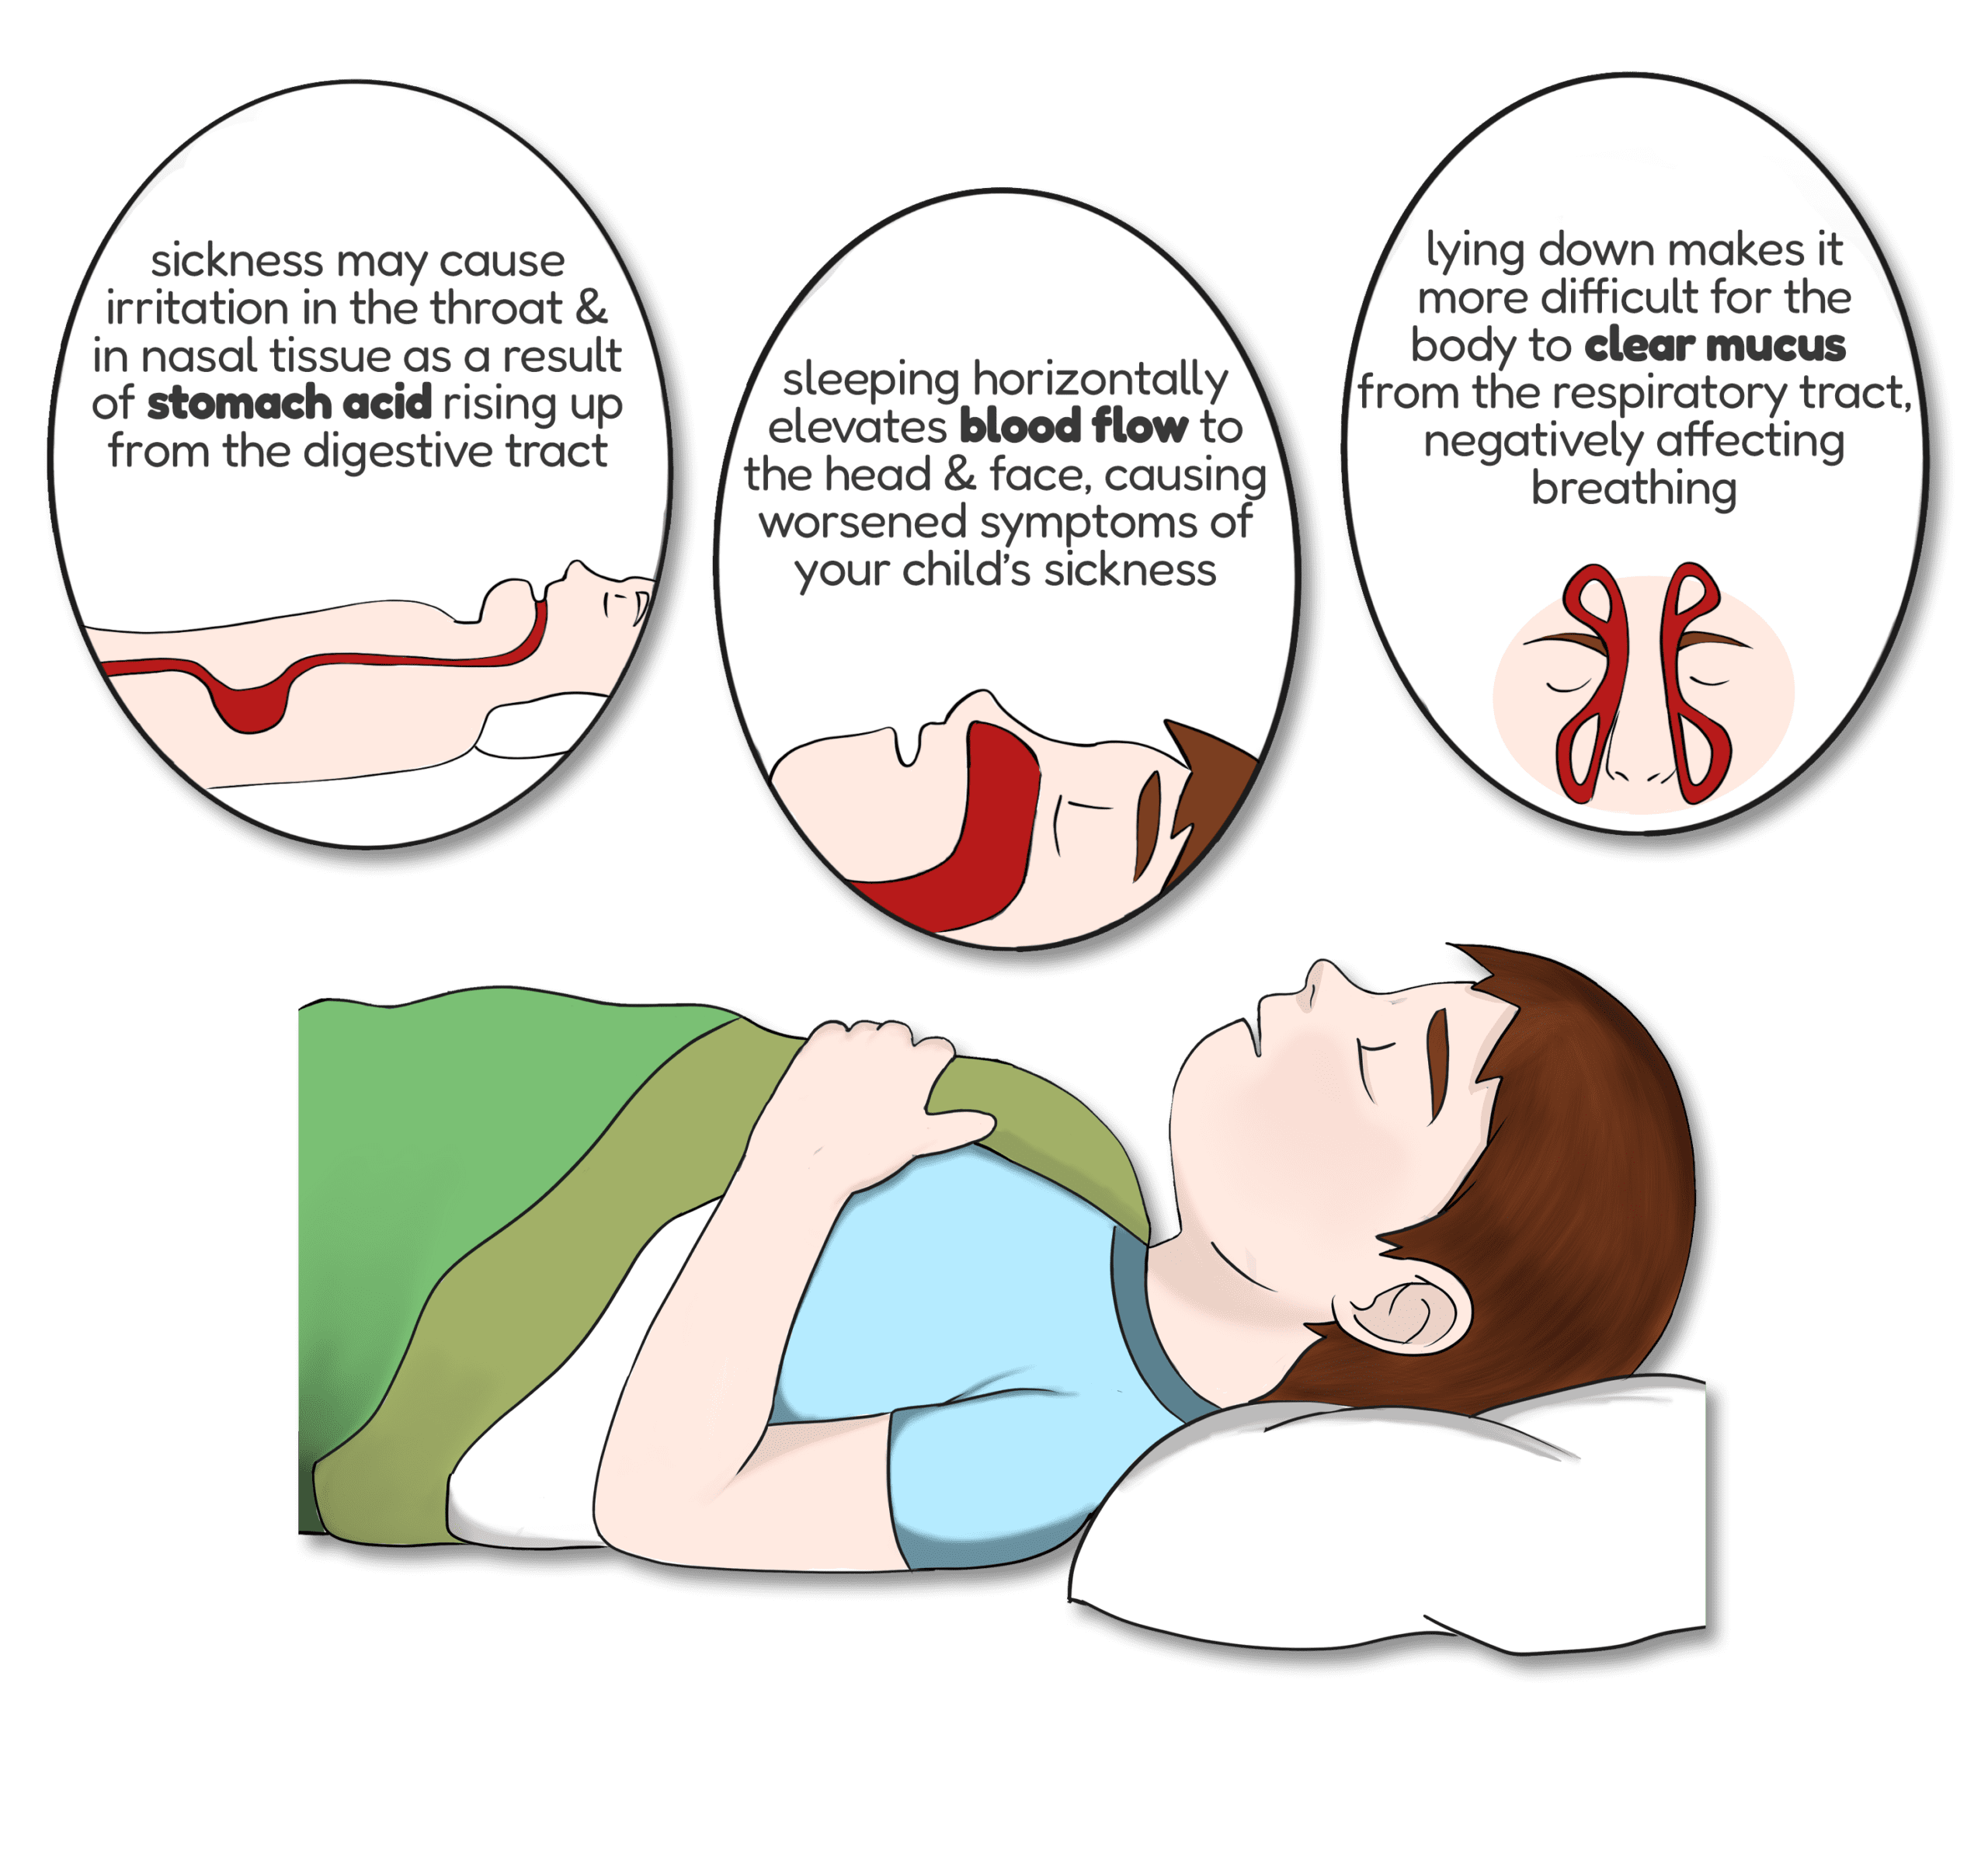 help child sleep while being sick